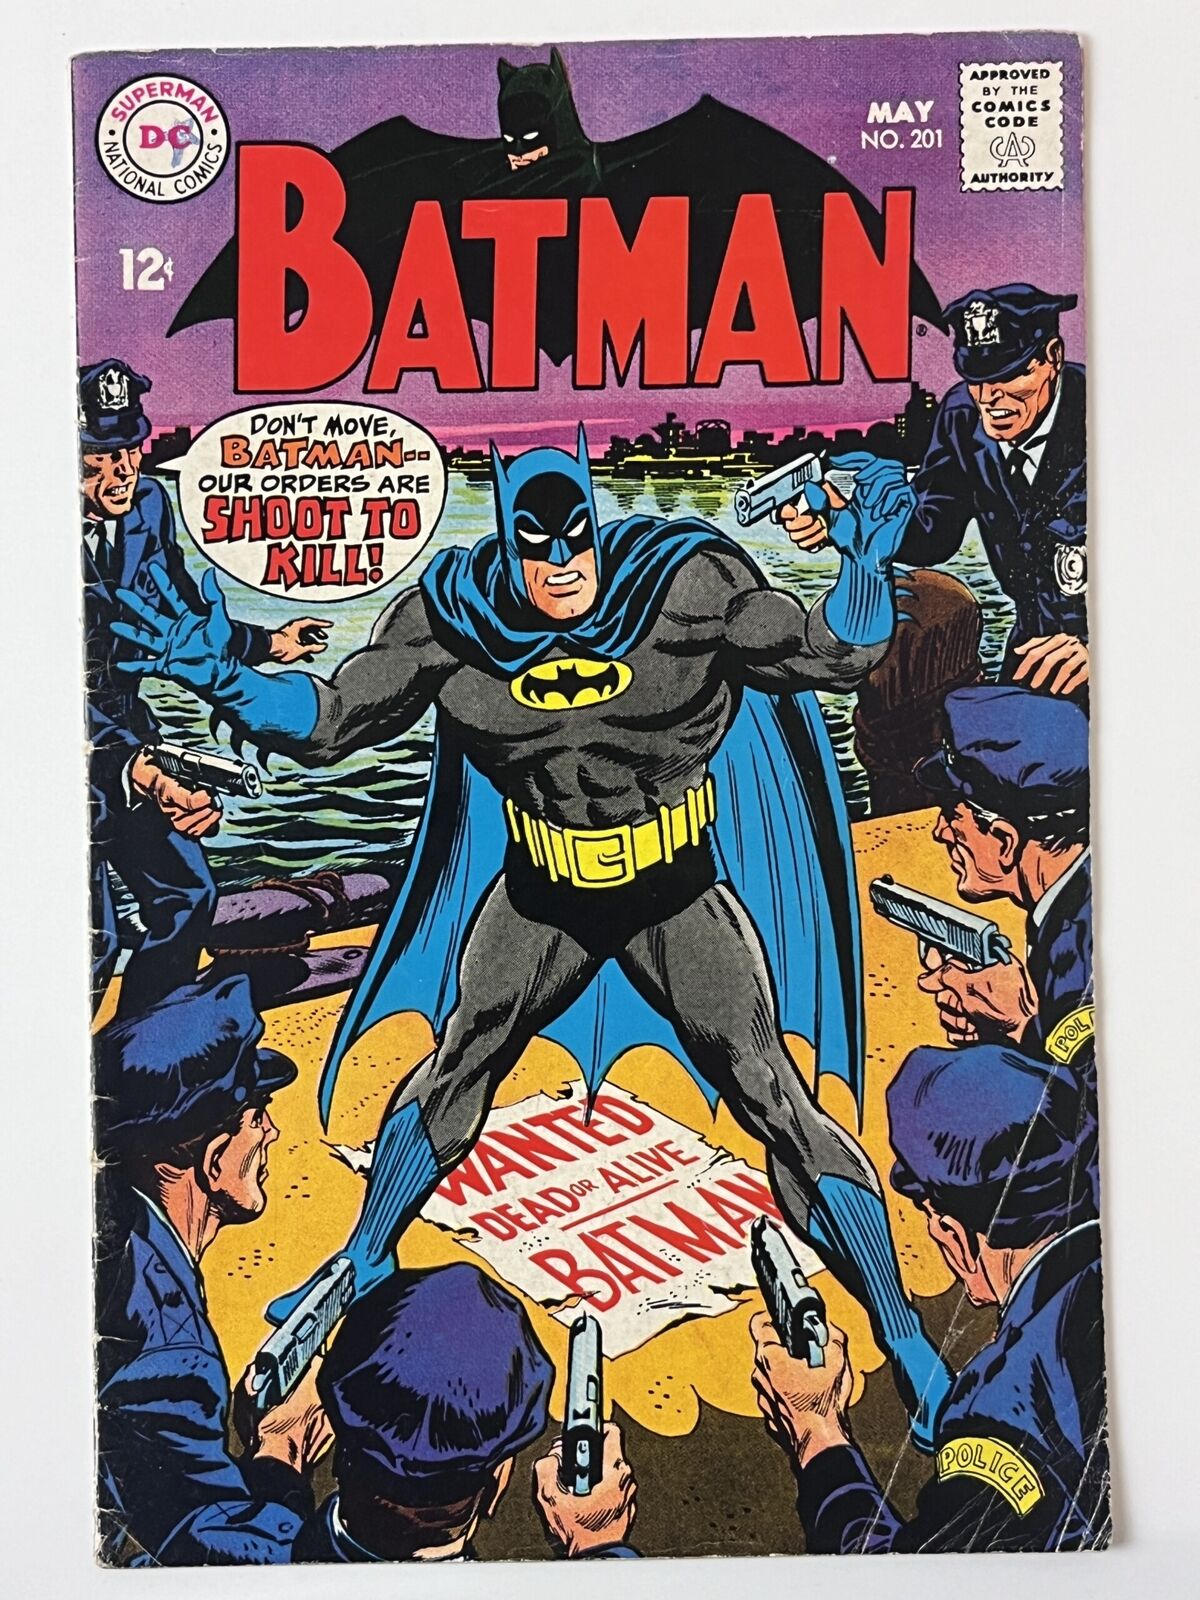 Batman #201 (1968) in 3.5 Very Good-